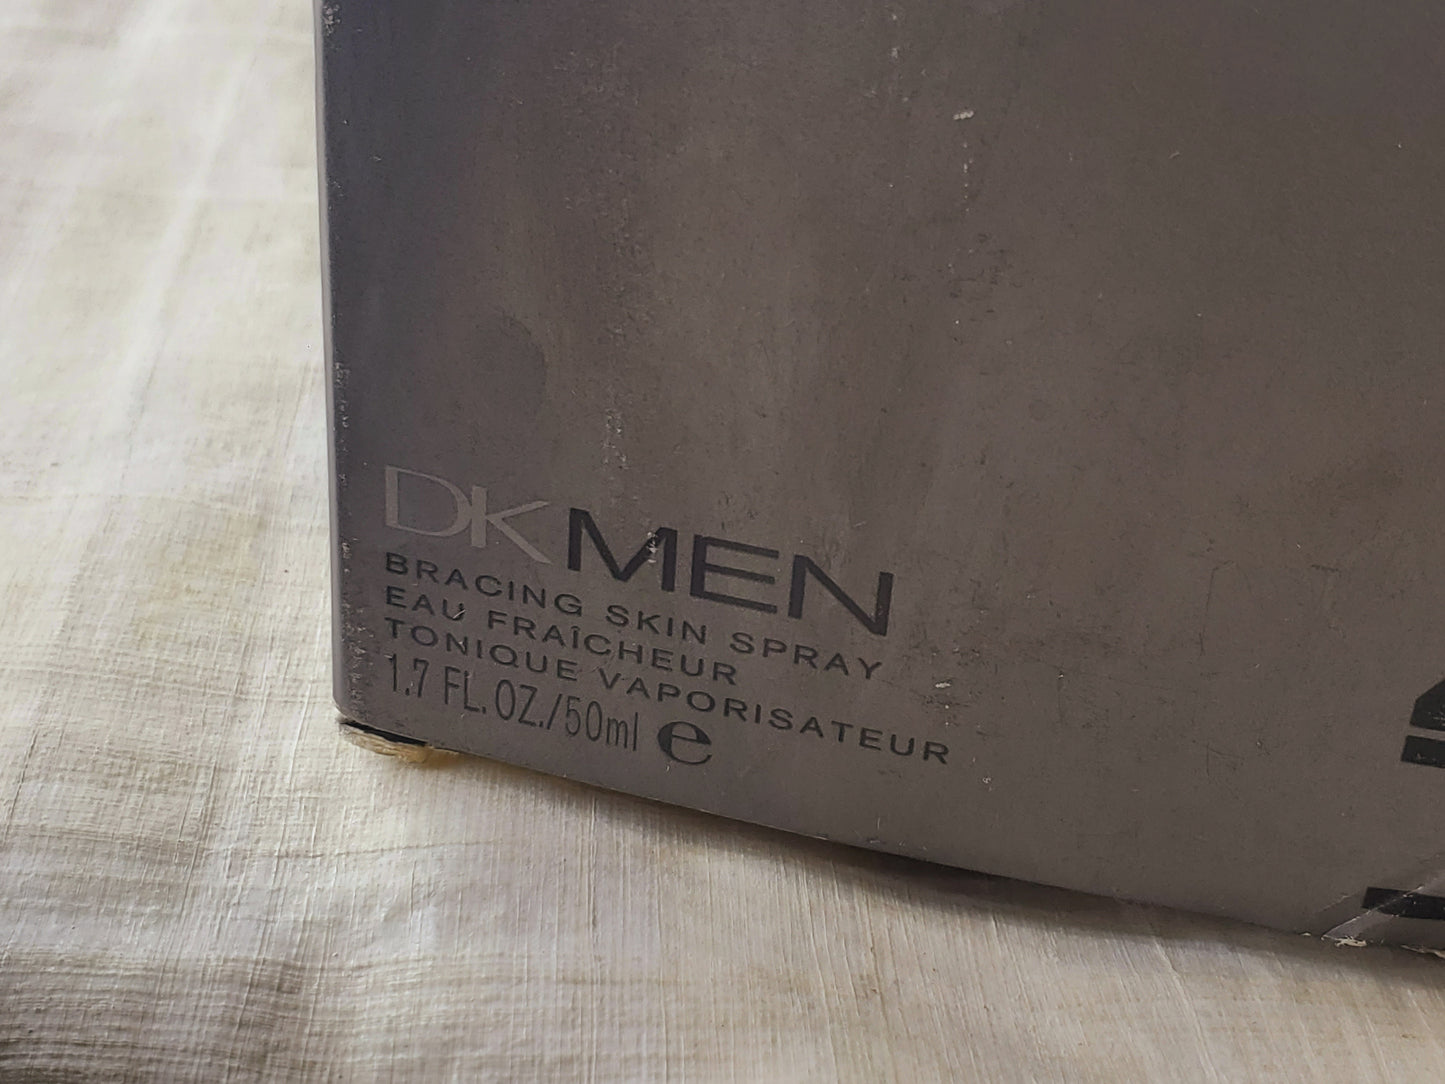 DK Men Unleaded Donna Karan for men Bracing Skin Eau Fraicheur Spray 100 ml 3.4 oz OR 50 ml 1.7 oz, Vintage, Rare, Sealed